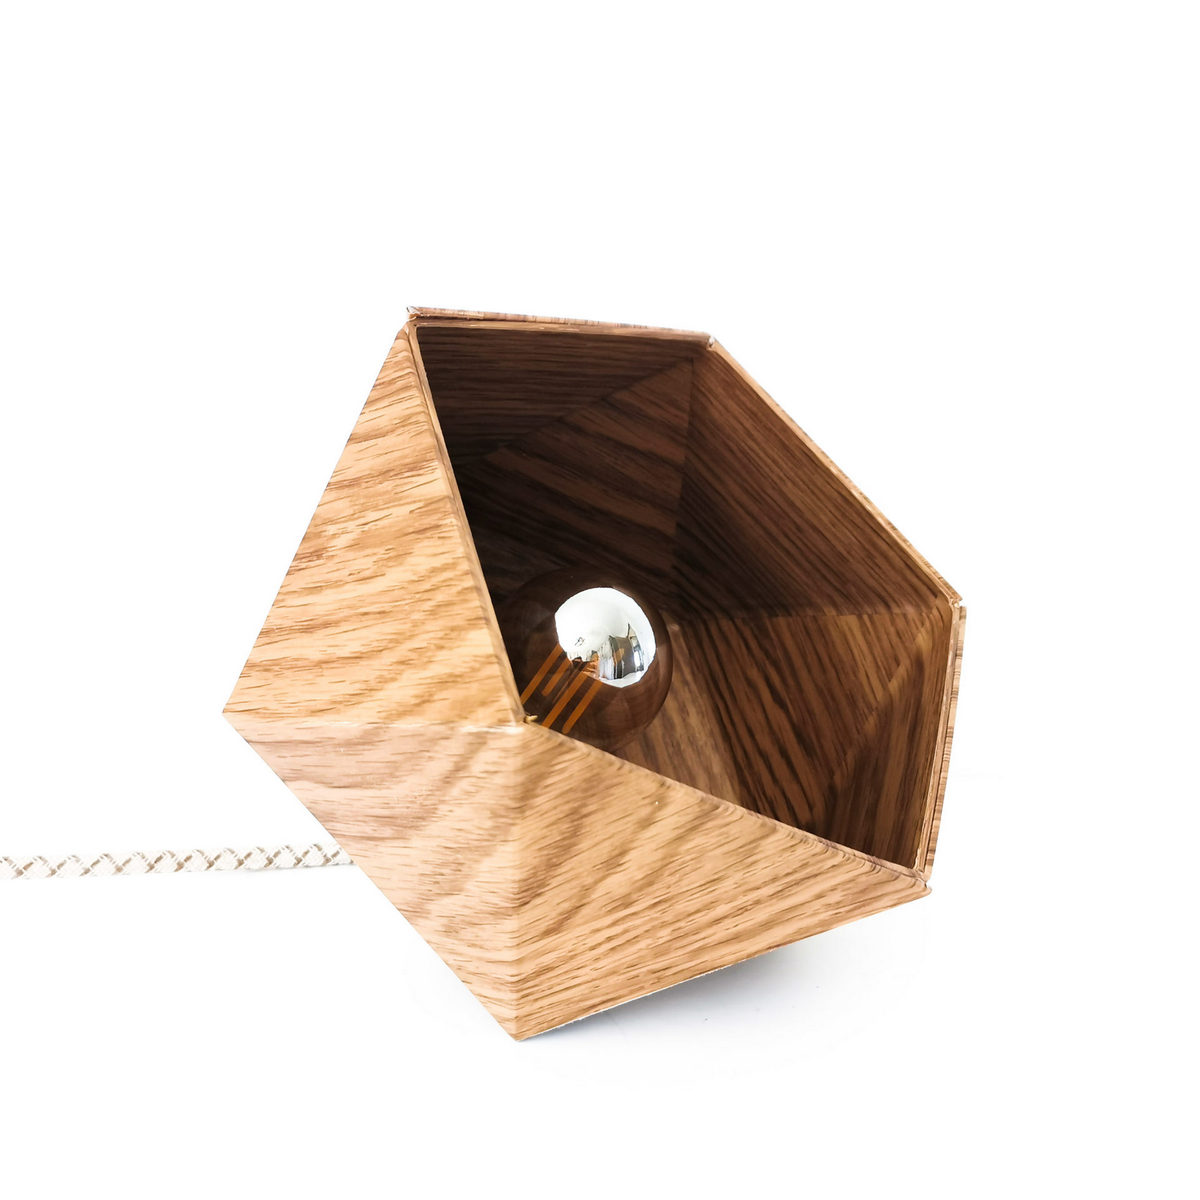 leewalia lampe origami en chene made in france une idee cadeau chez ugo et lea (1)